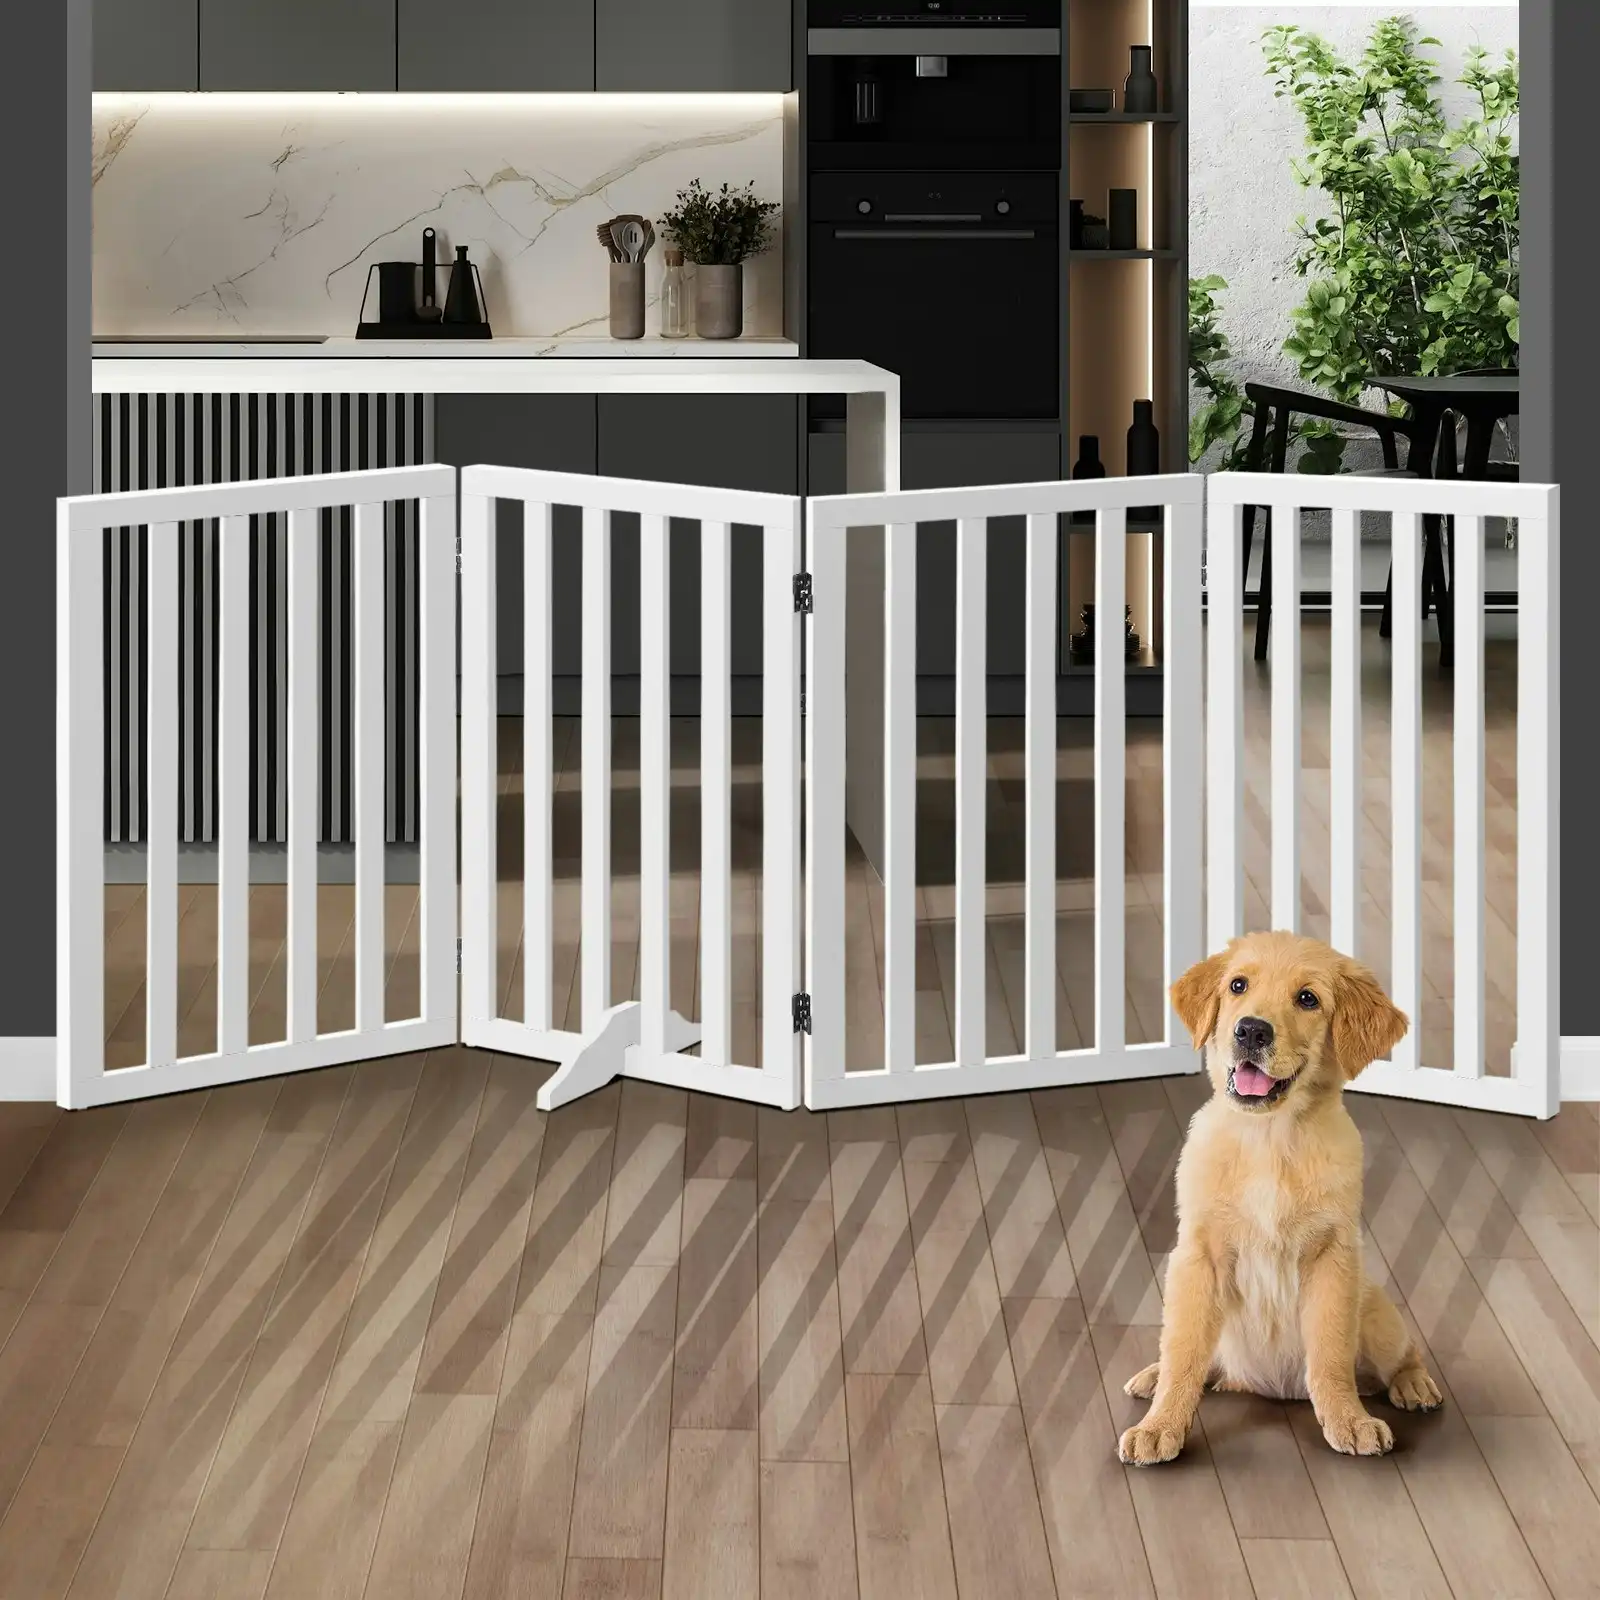 Alopet Wooden Pet Gate Dog Fence Safety Stair Barrier Security Door 4-Panel 80cm